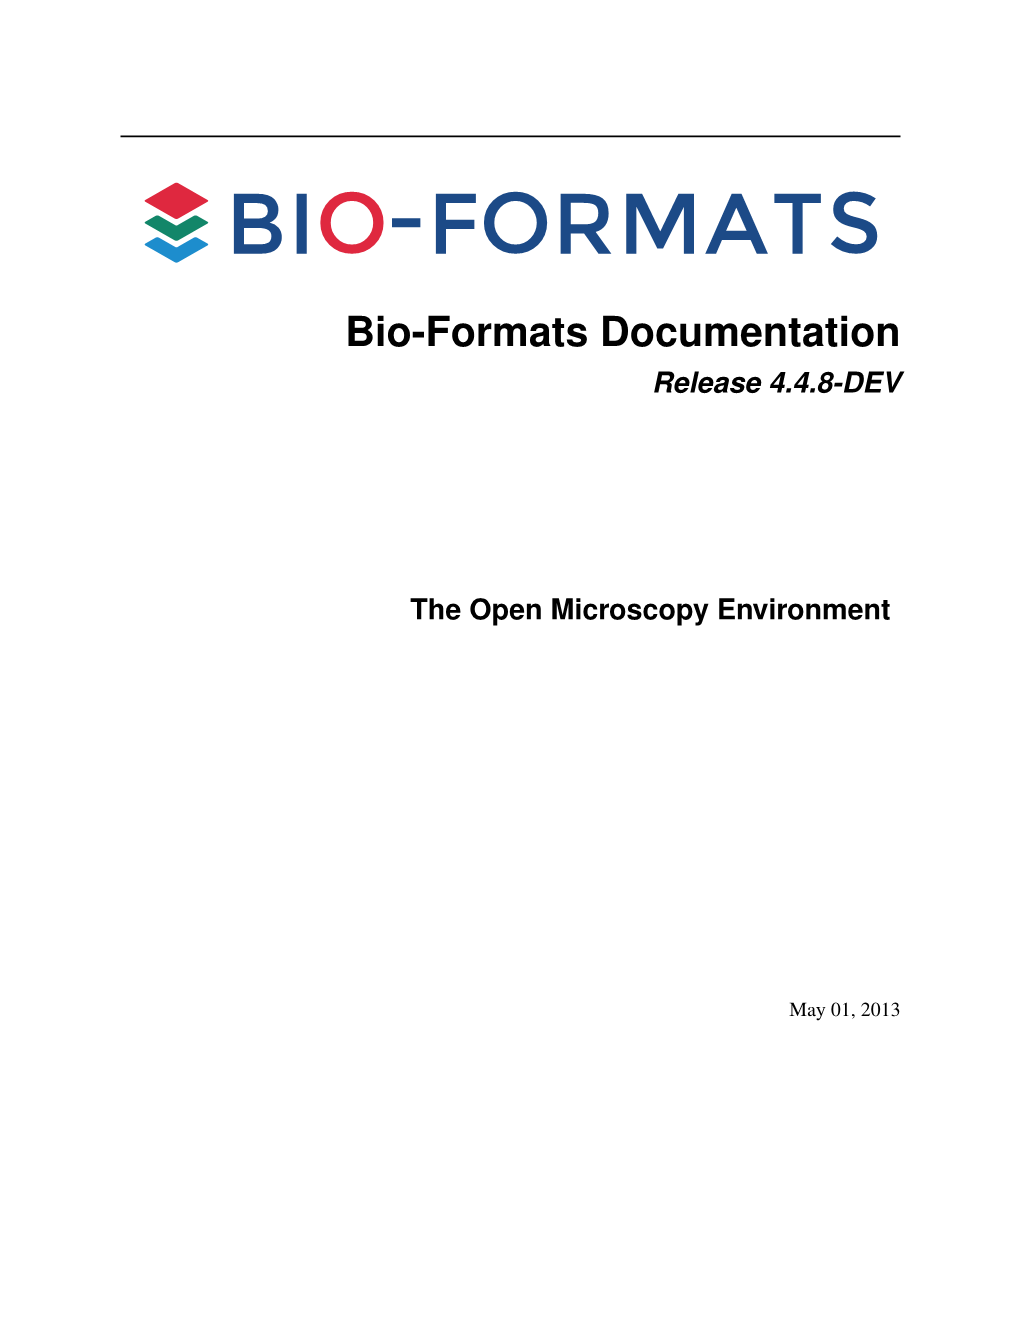 Bio-Formats Documentation Release 4.4.8-DEV